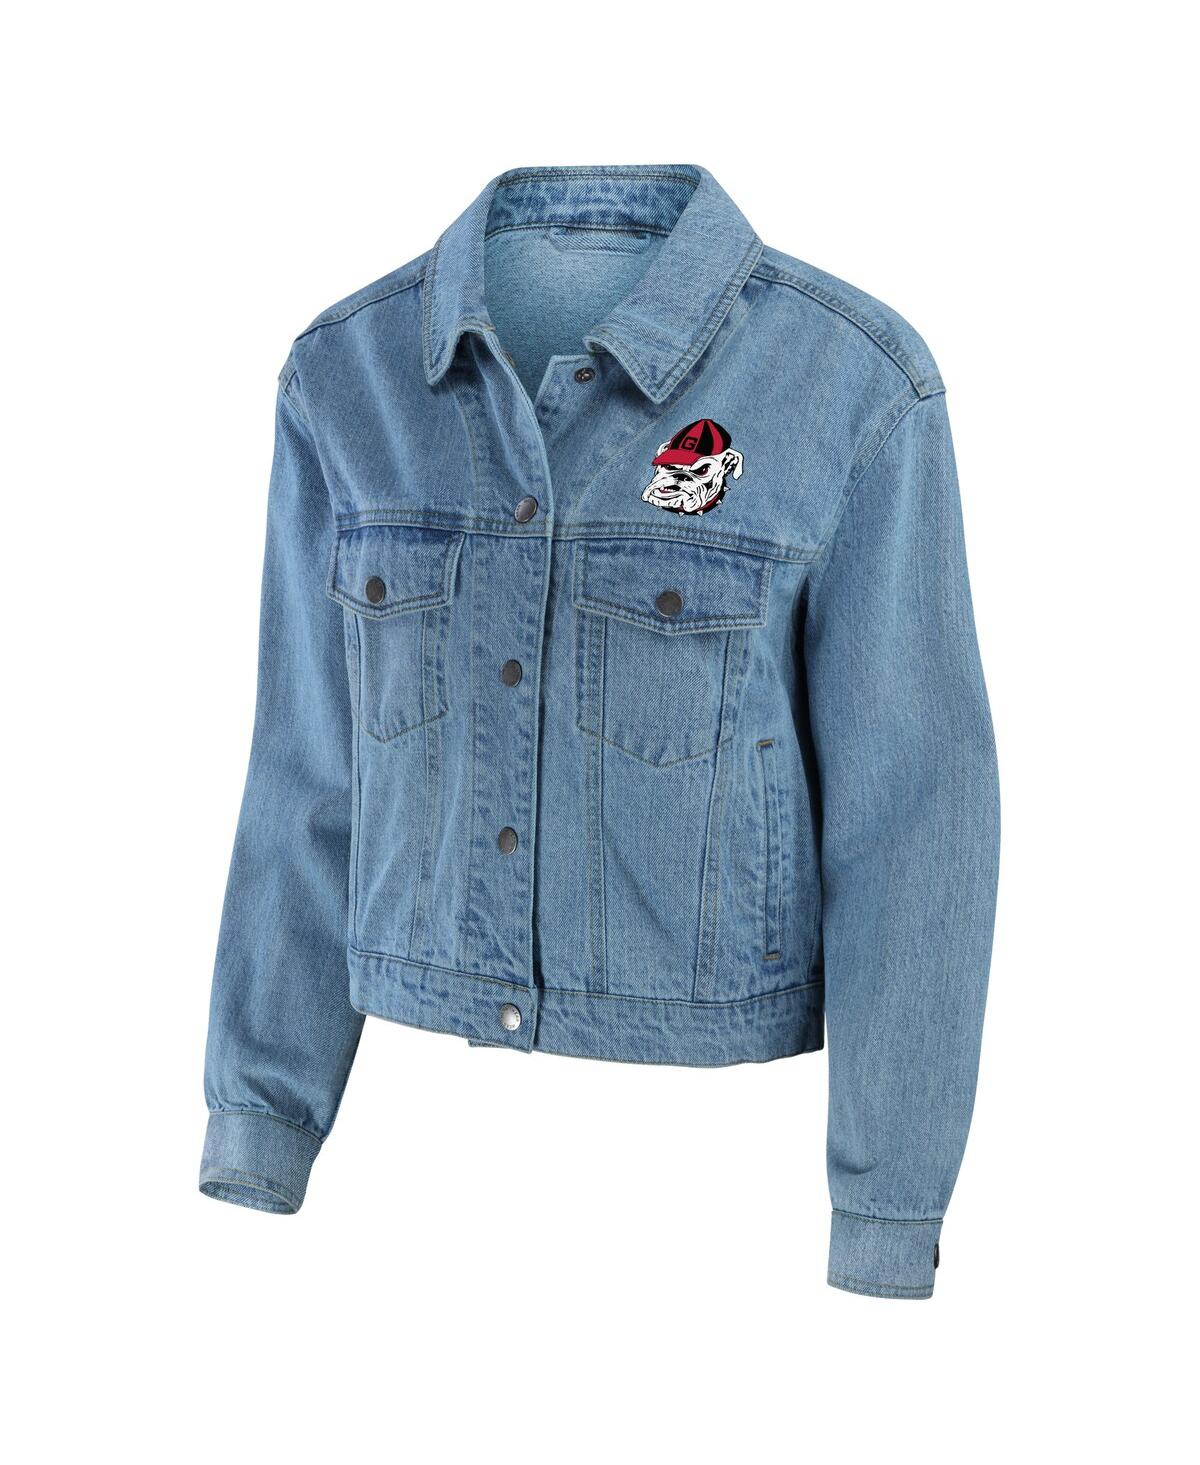 Shop Wear By Erin Andrews Women's  Georgia Bulldogs Button-up Denim Jacket